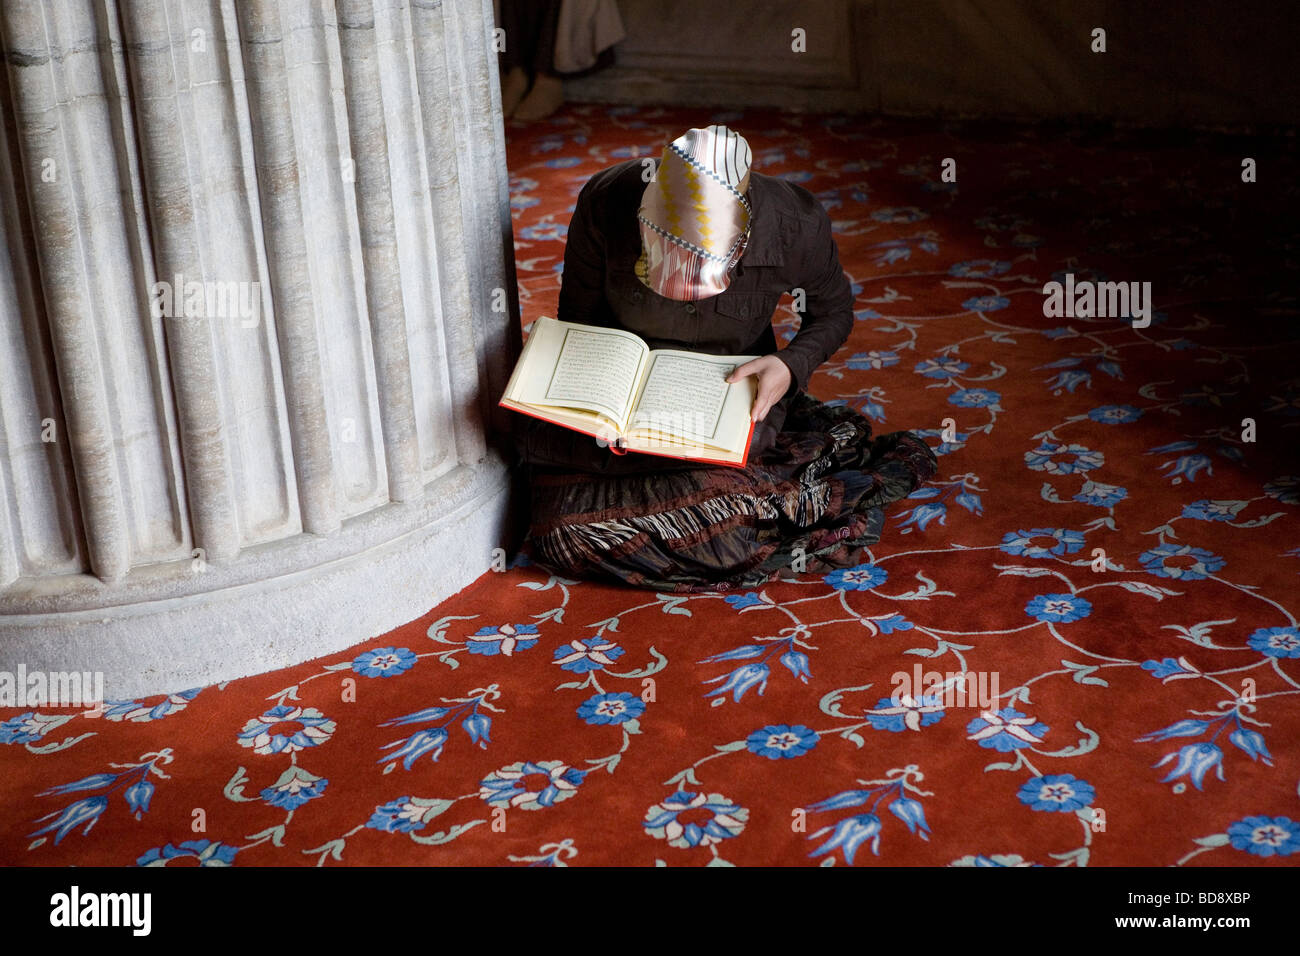 girl reads in Koran, Mosque Turkey Stock Photo